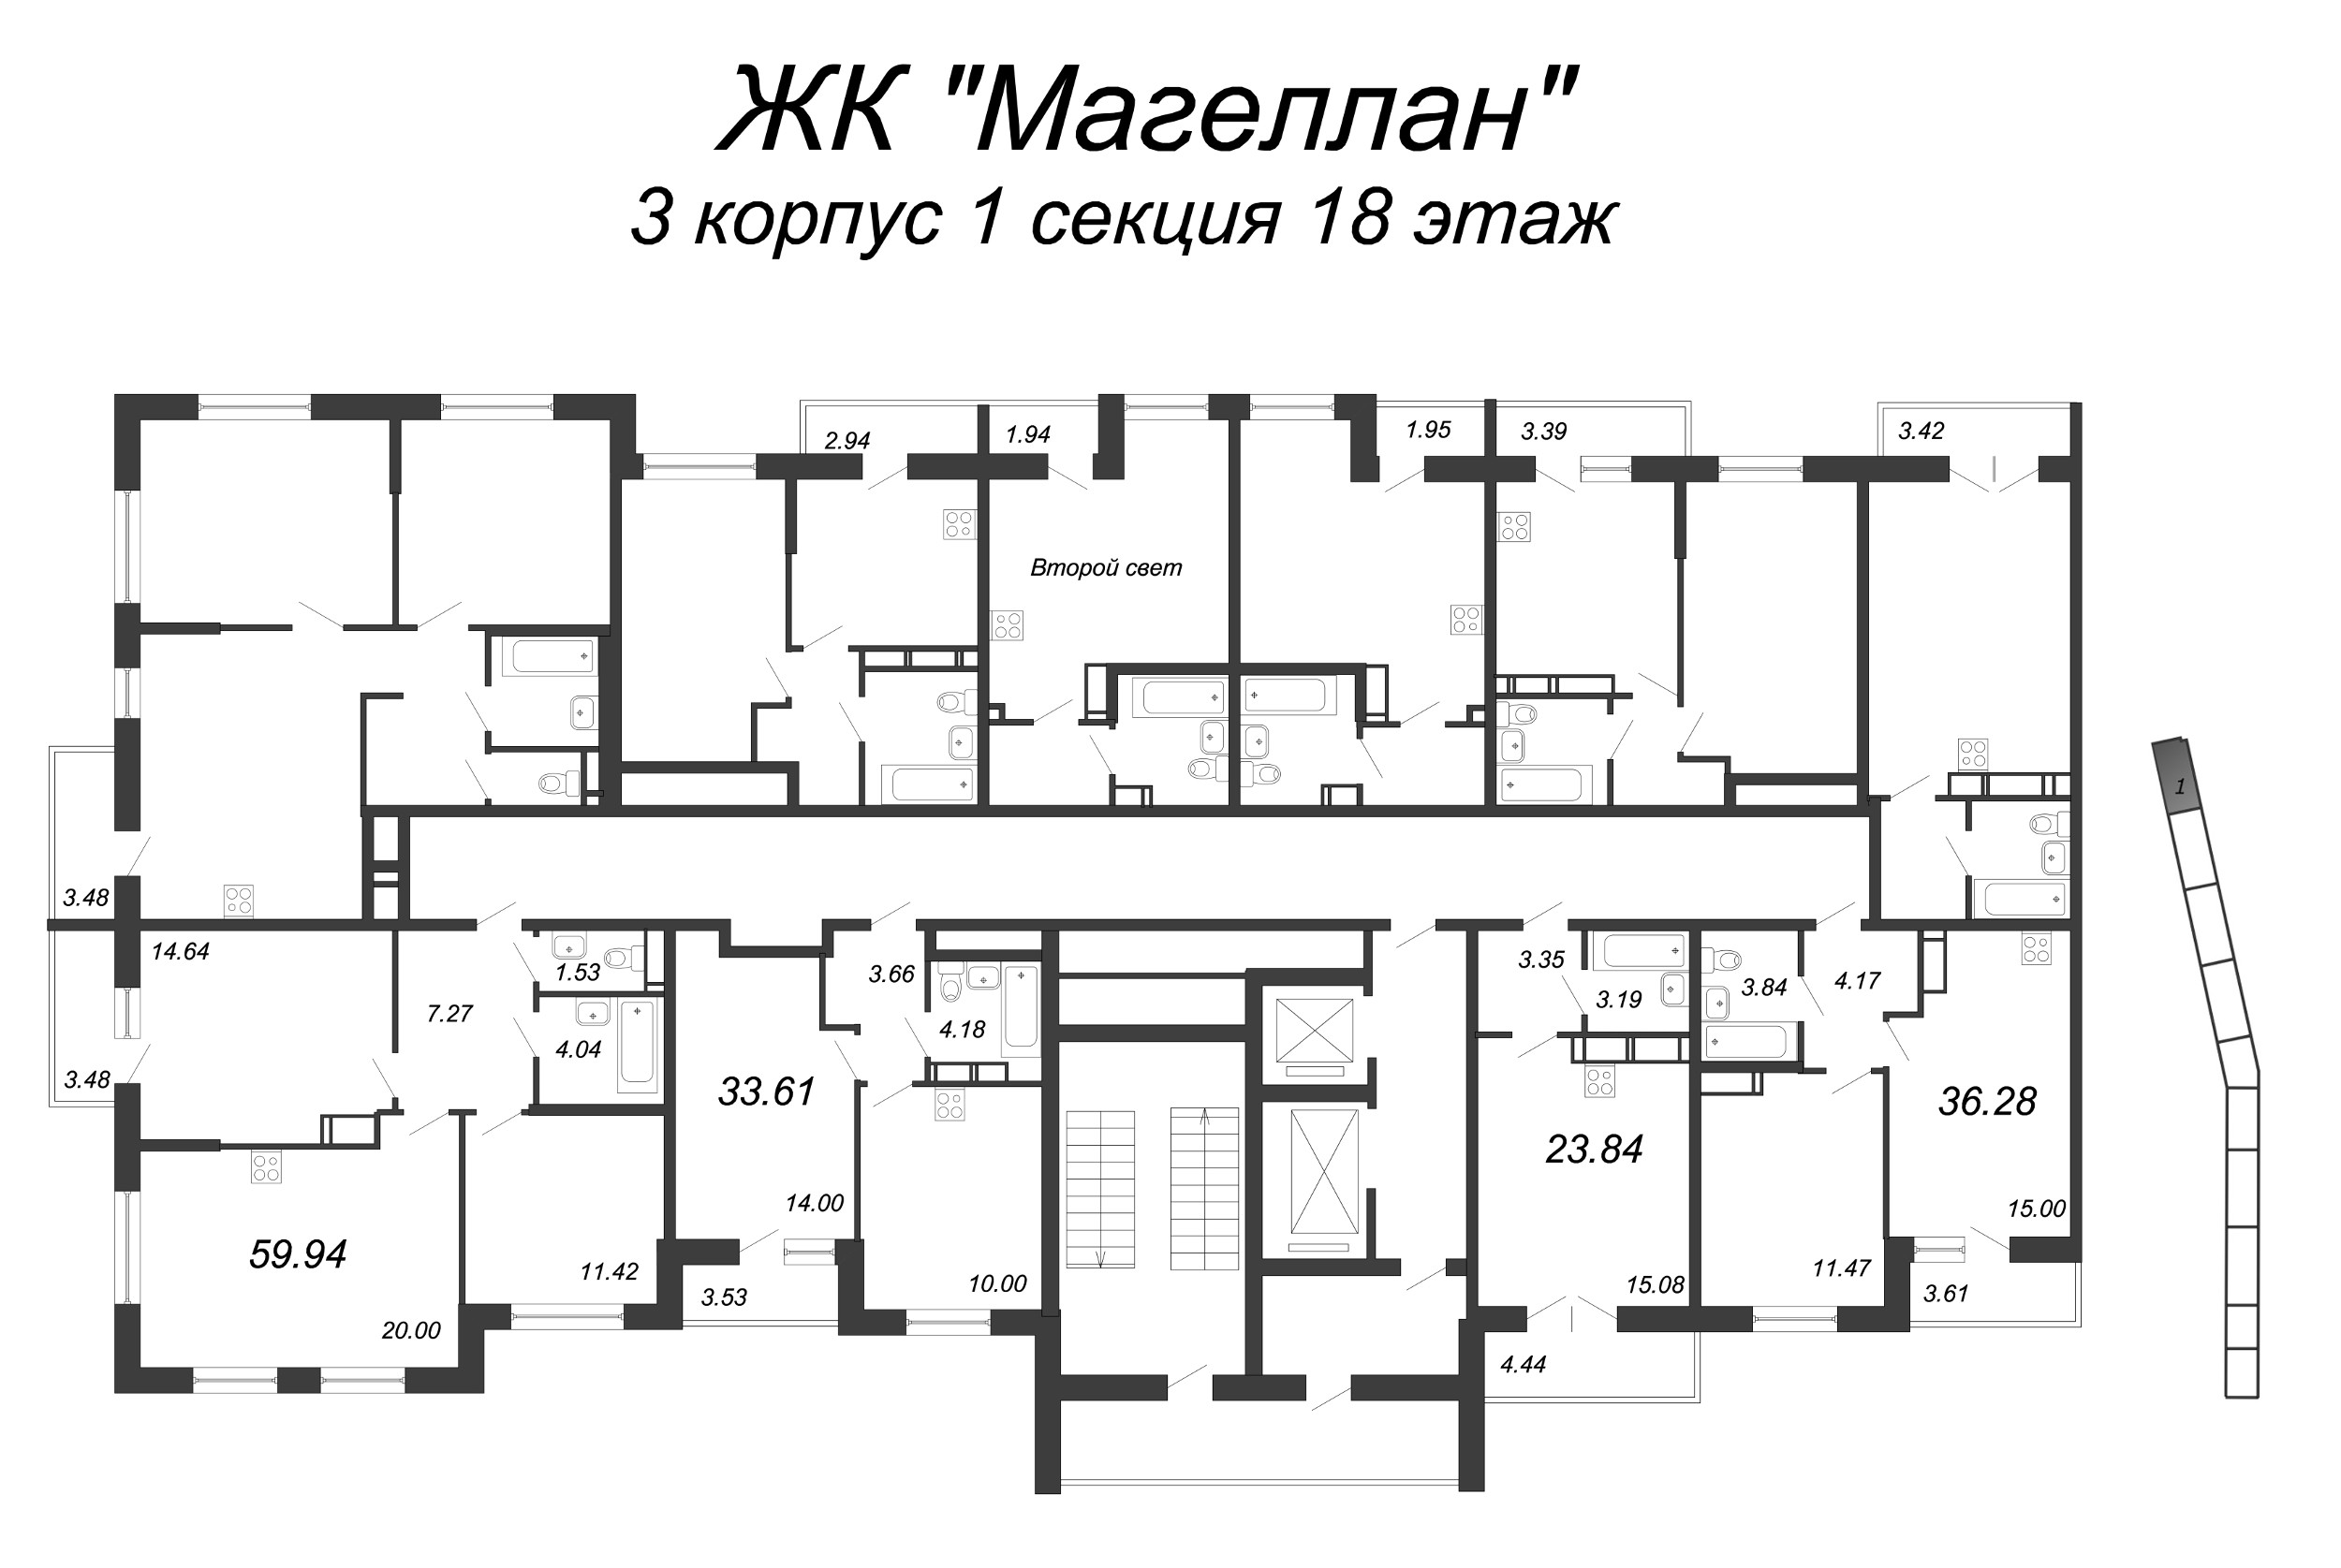 3-комнатная (Евро) квартира, 60.1 м² - планировка этажа